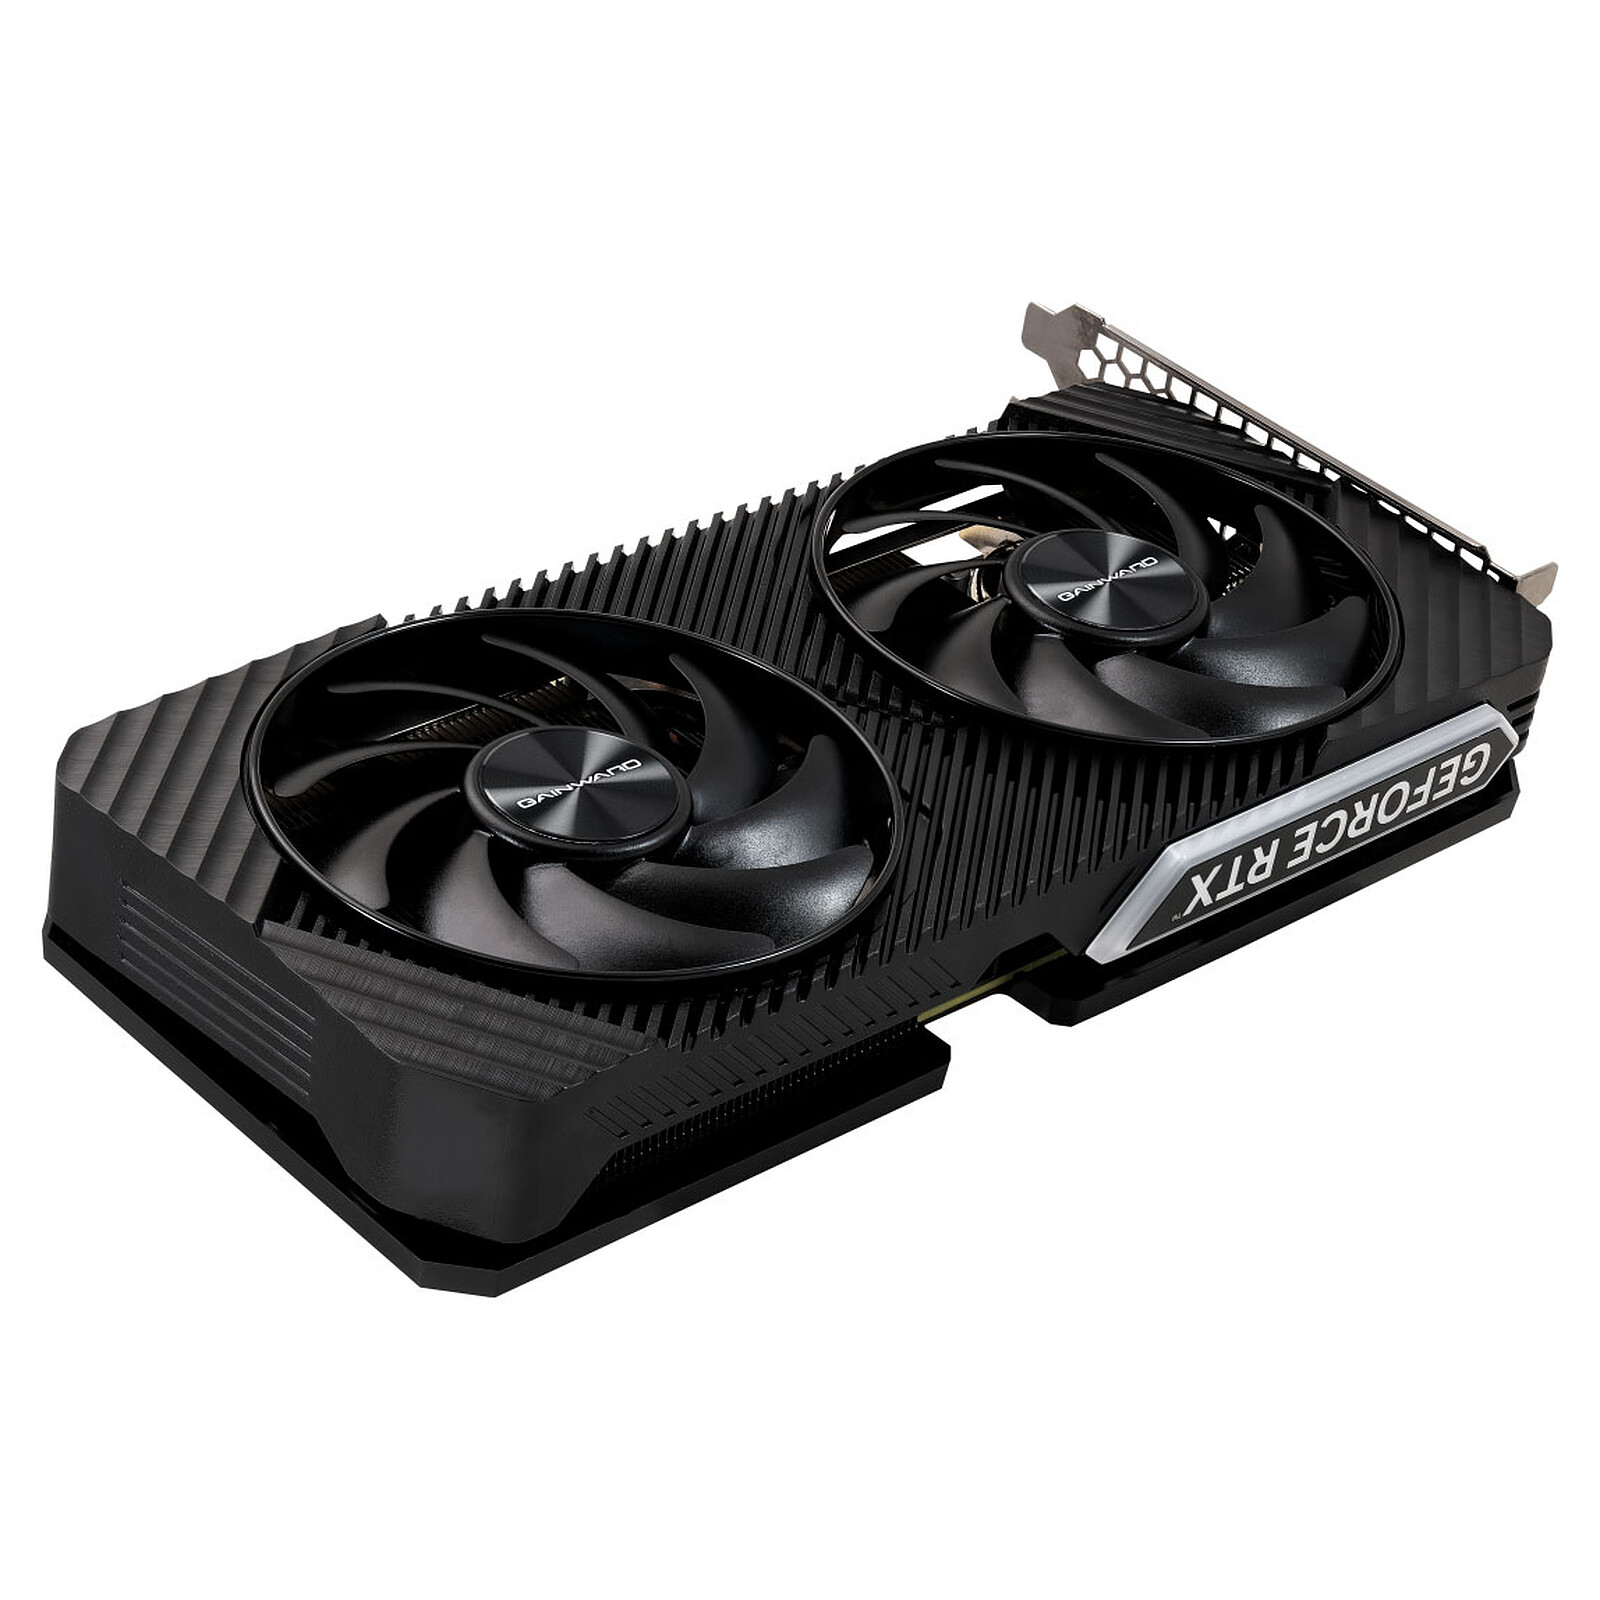 Products :: GeForce RTX™ 4060 Ti Ghost 8GB